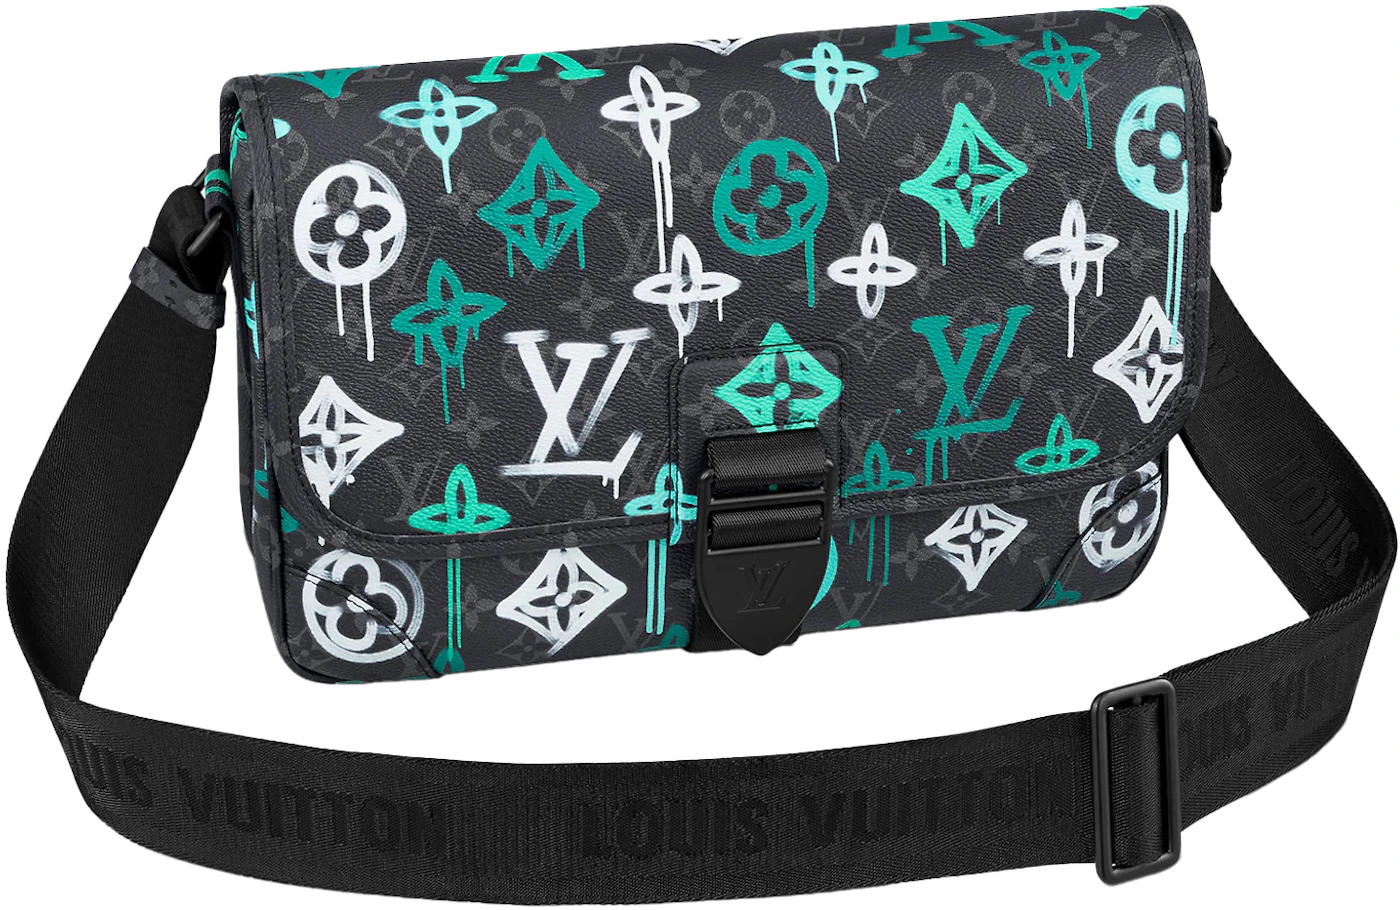 The Louis Vuitton LV Arch Bag